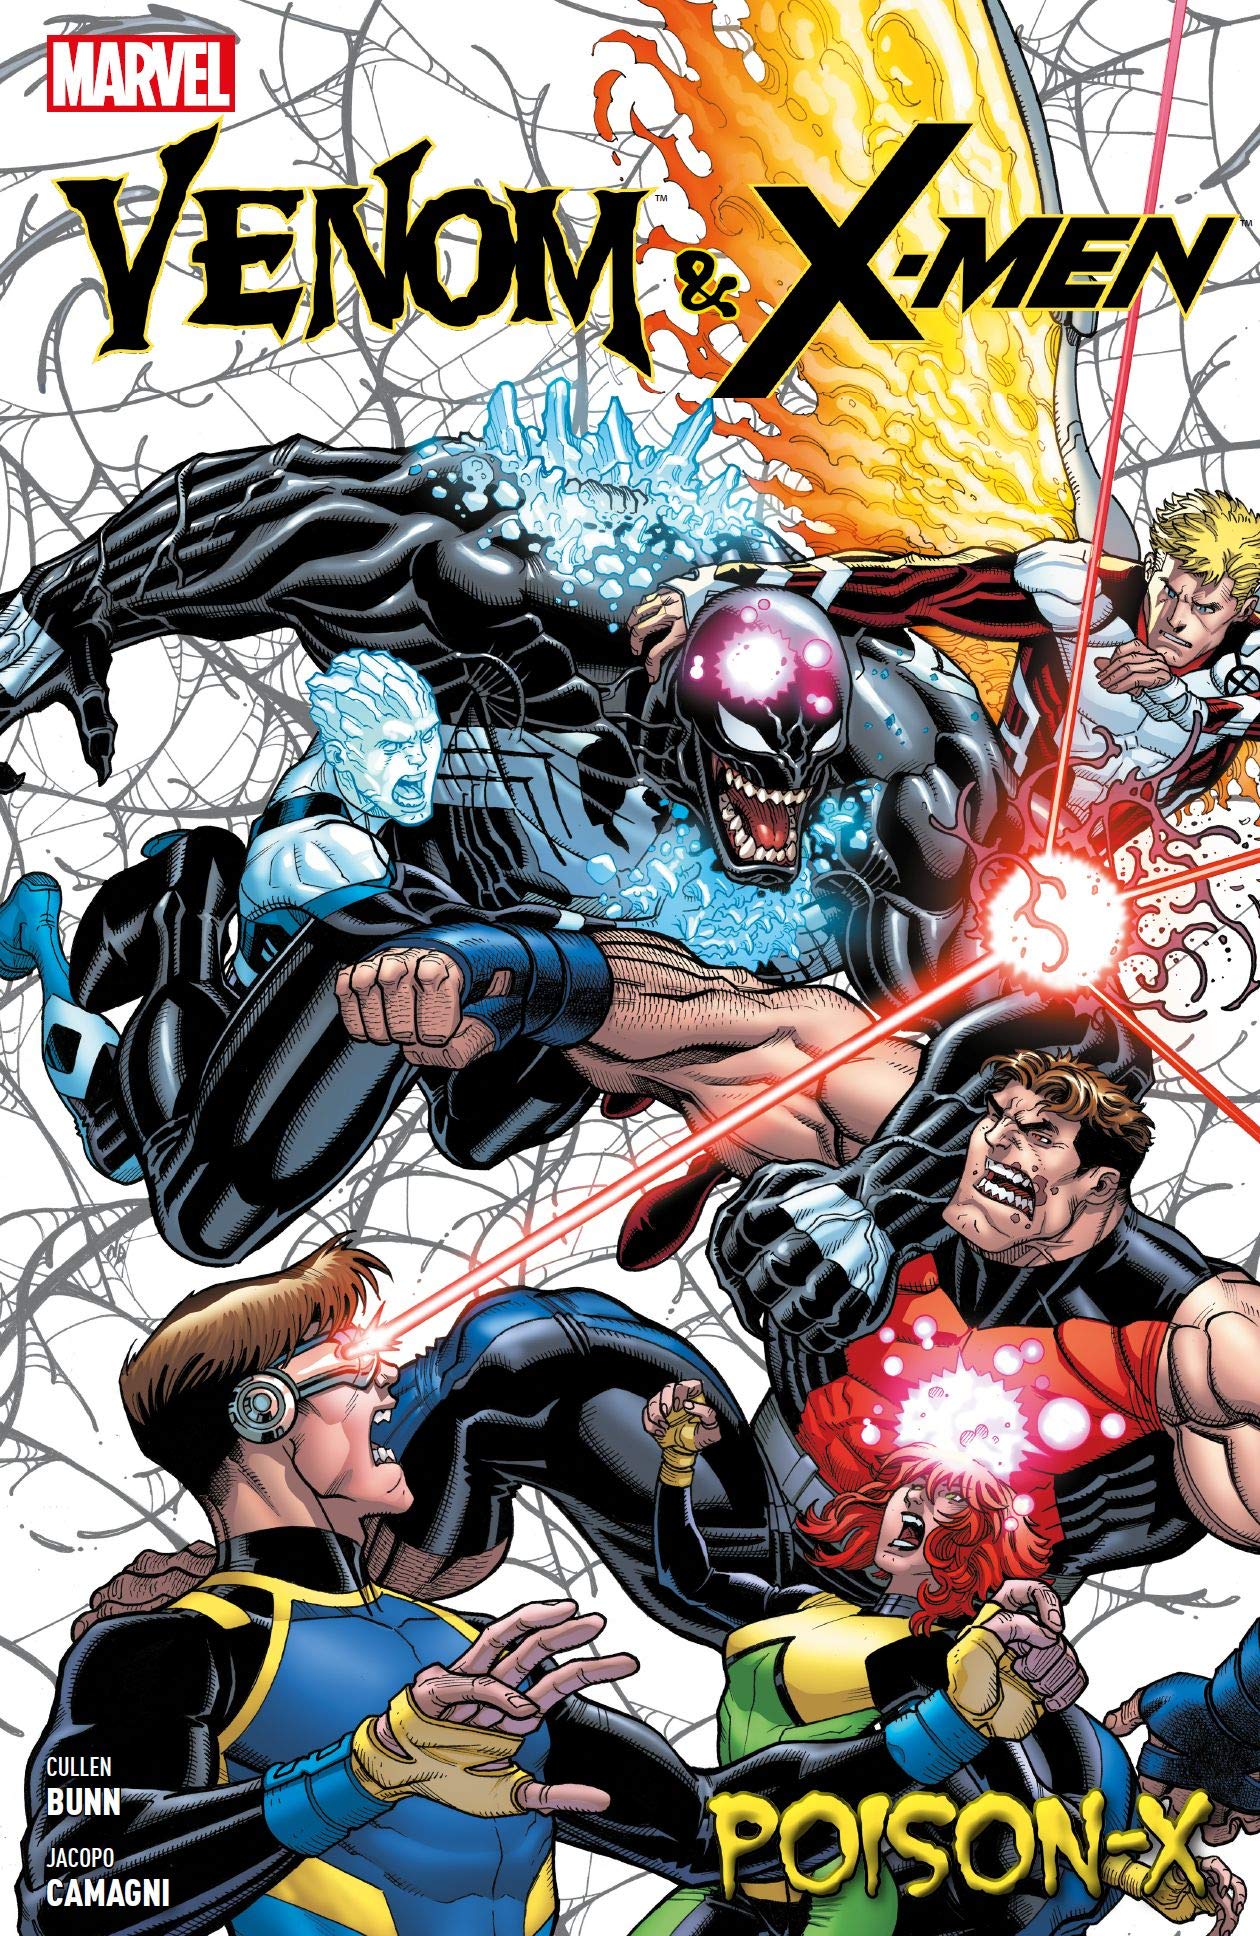 Venom & X-Men Poison-X